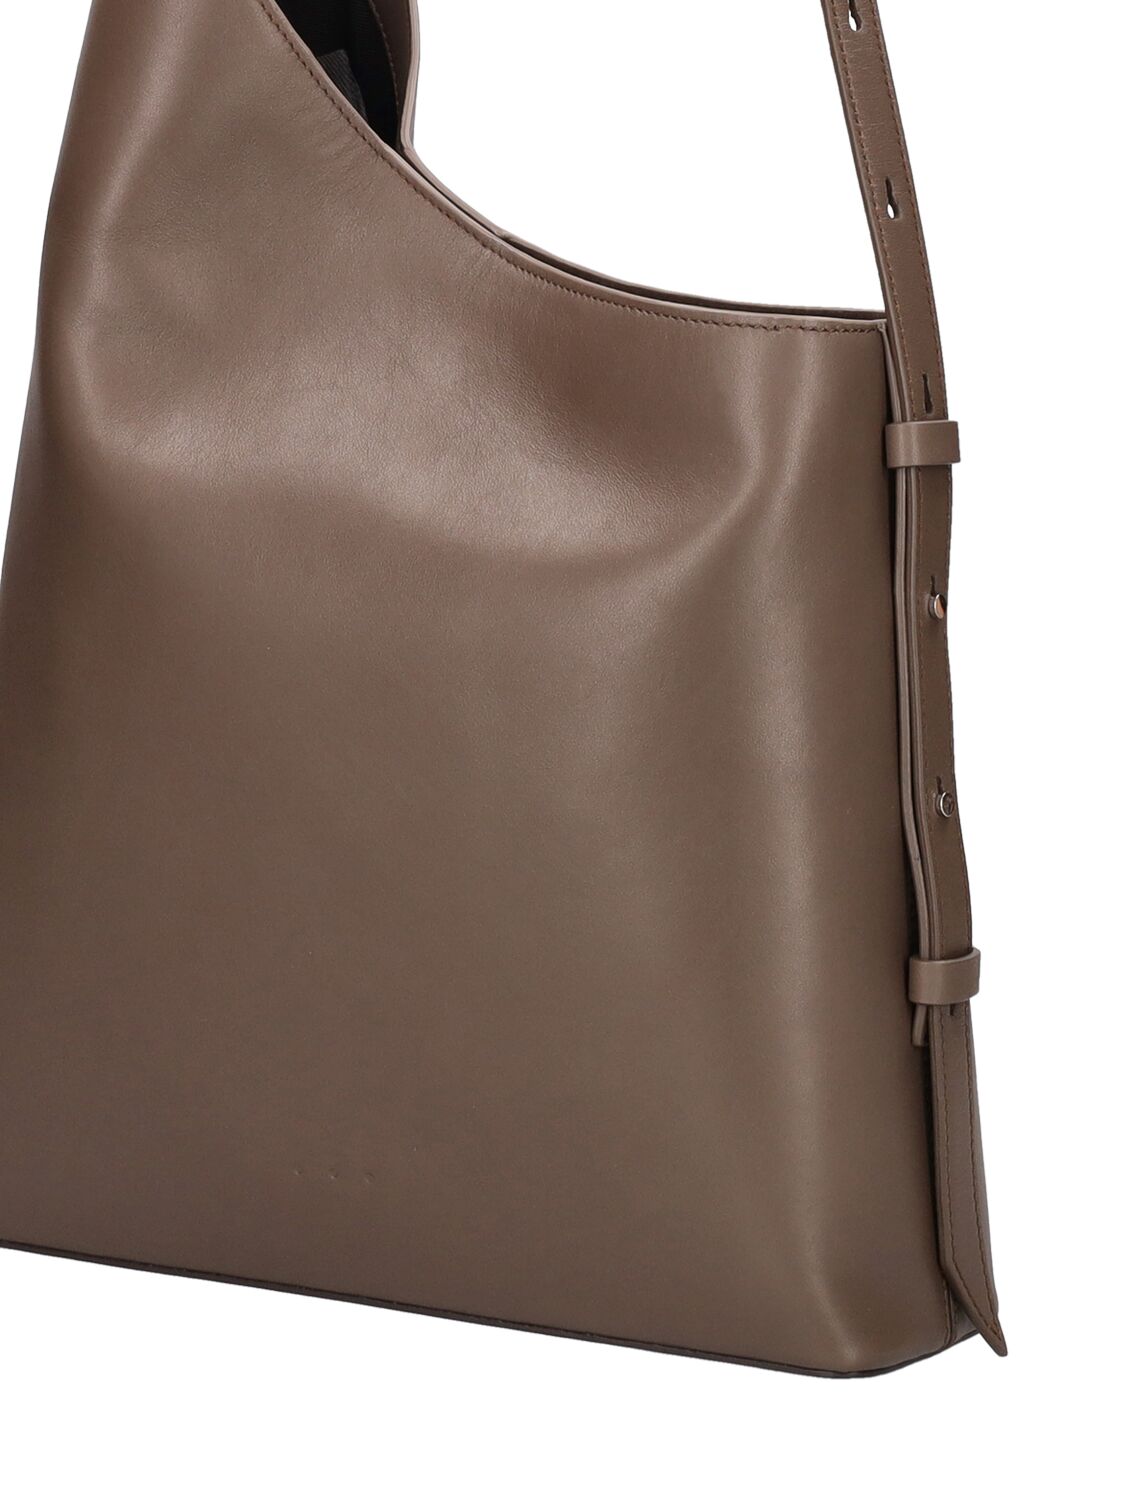 Aesther Ekme Demi Lune Shoulder Bag in Brown